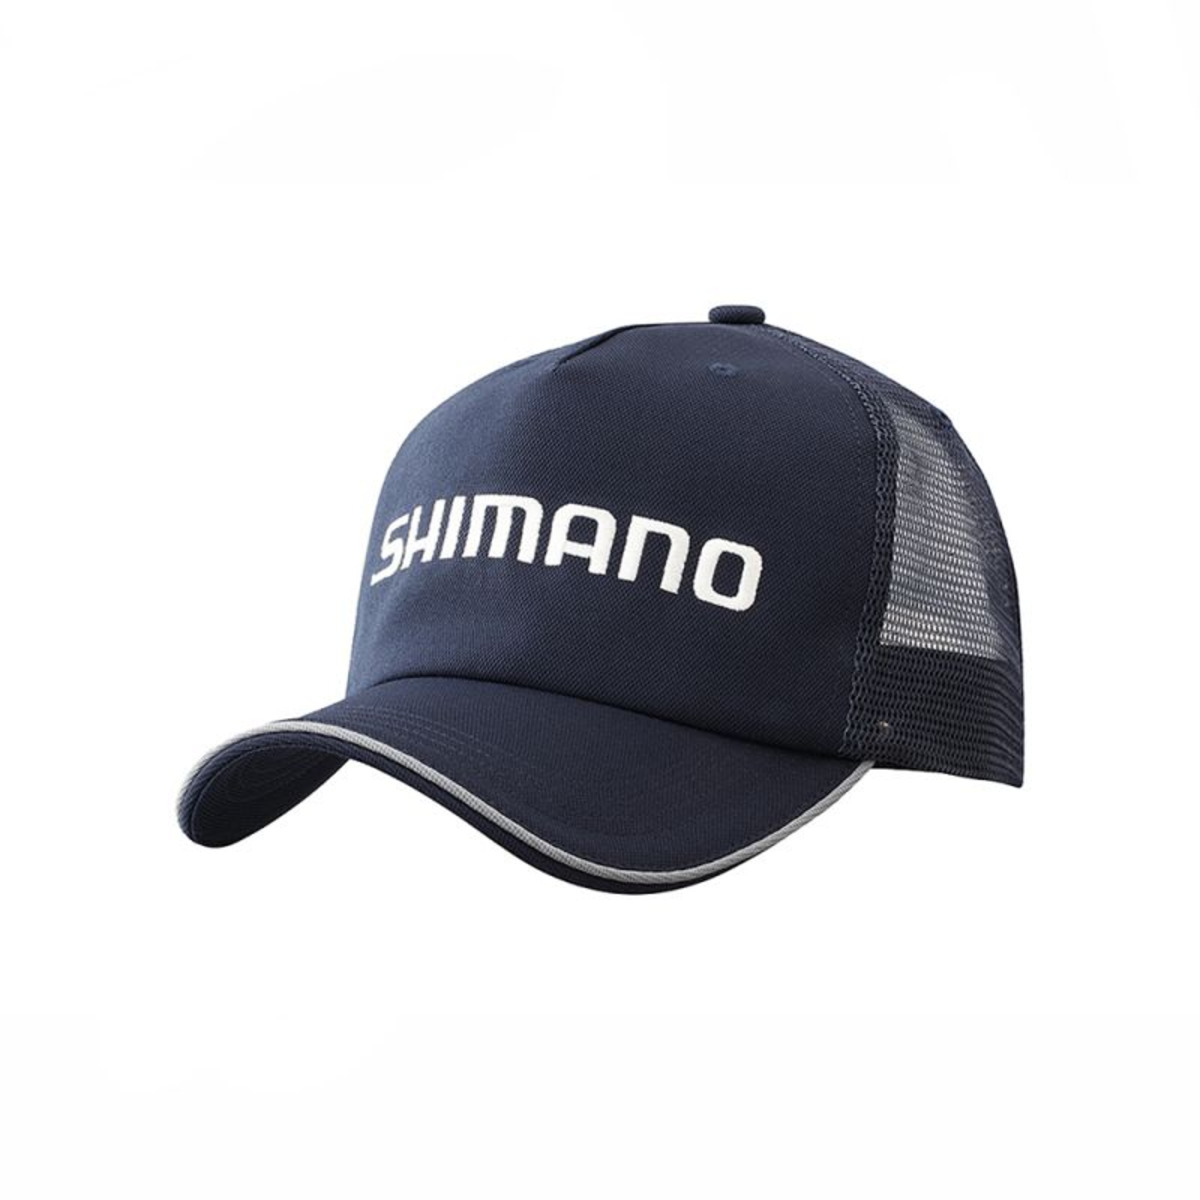 Shimano Standard Mesh Cap - Navy